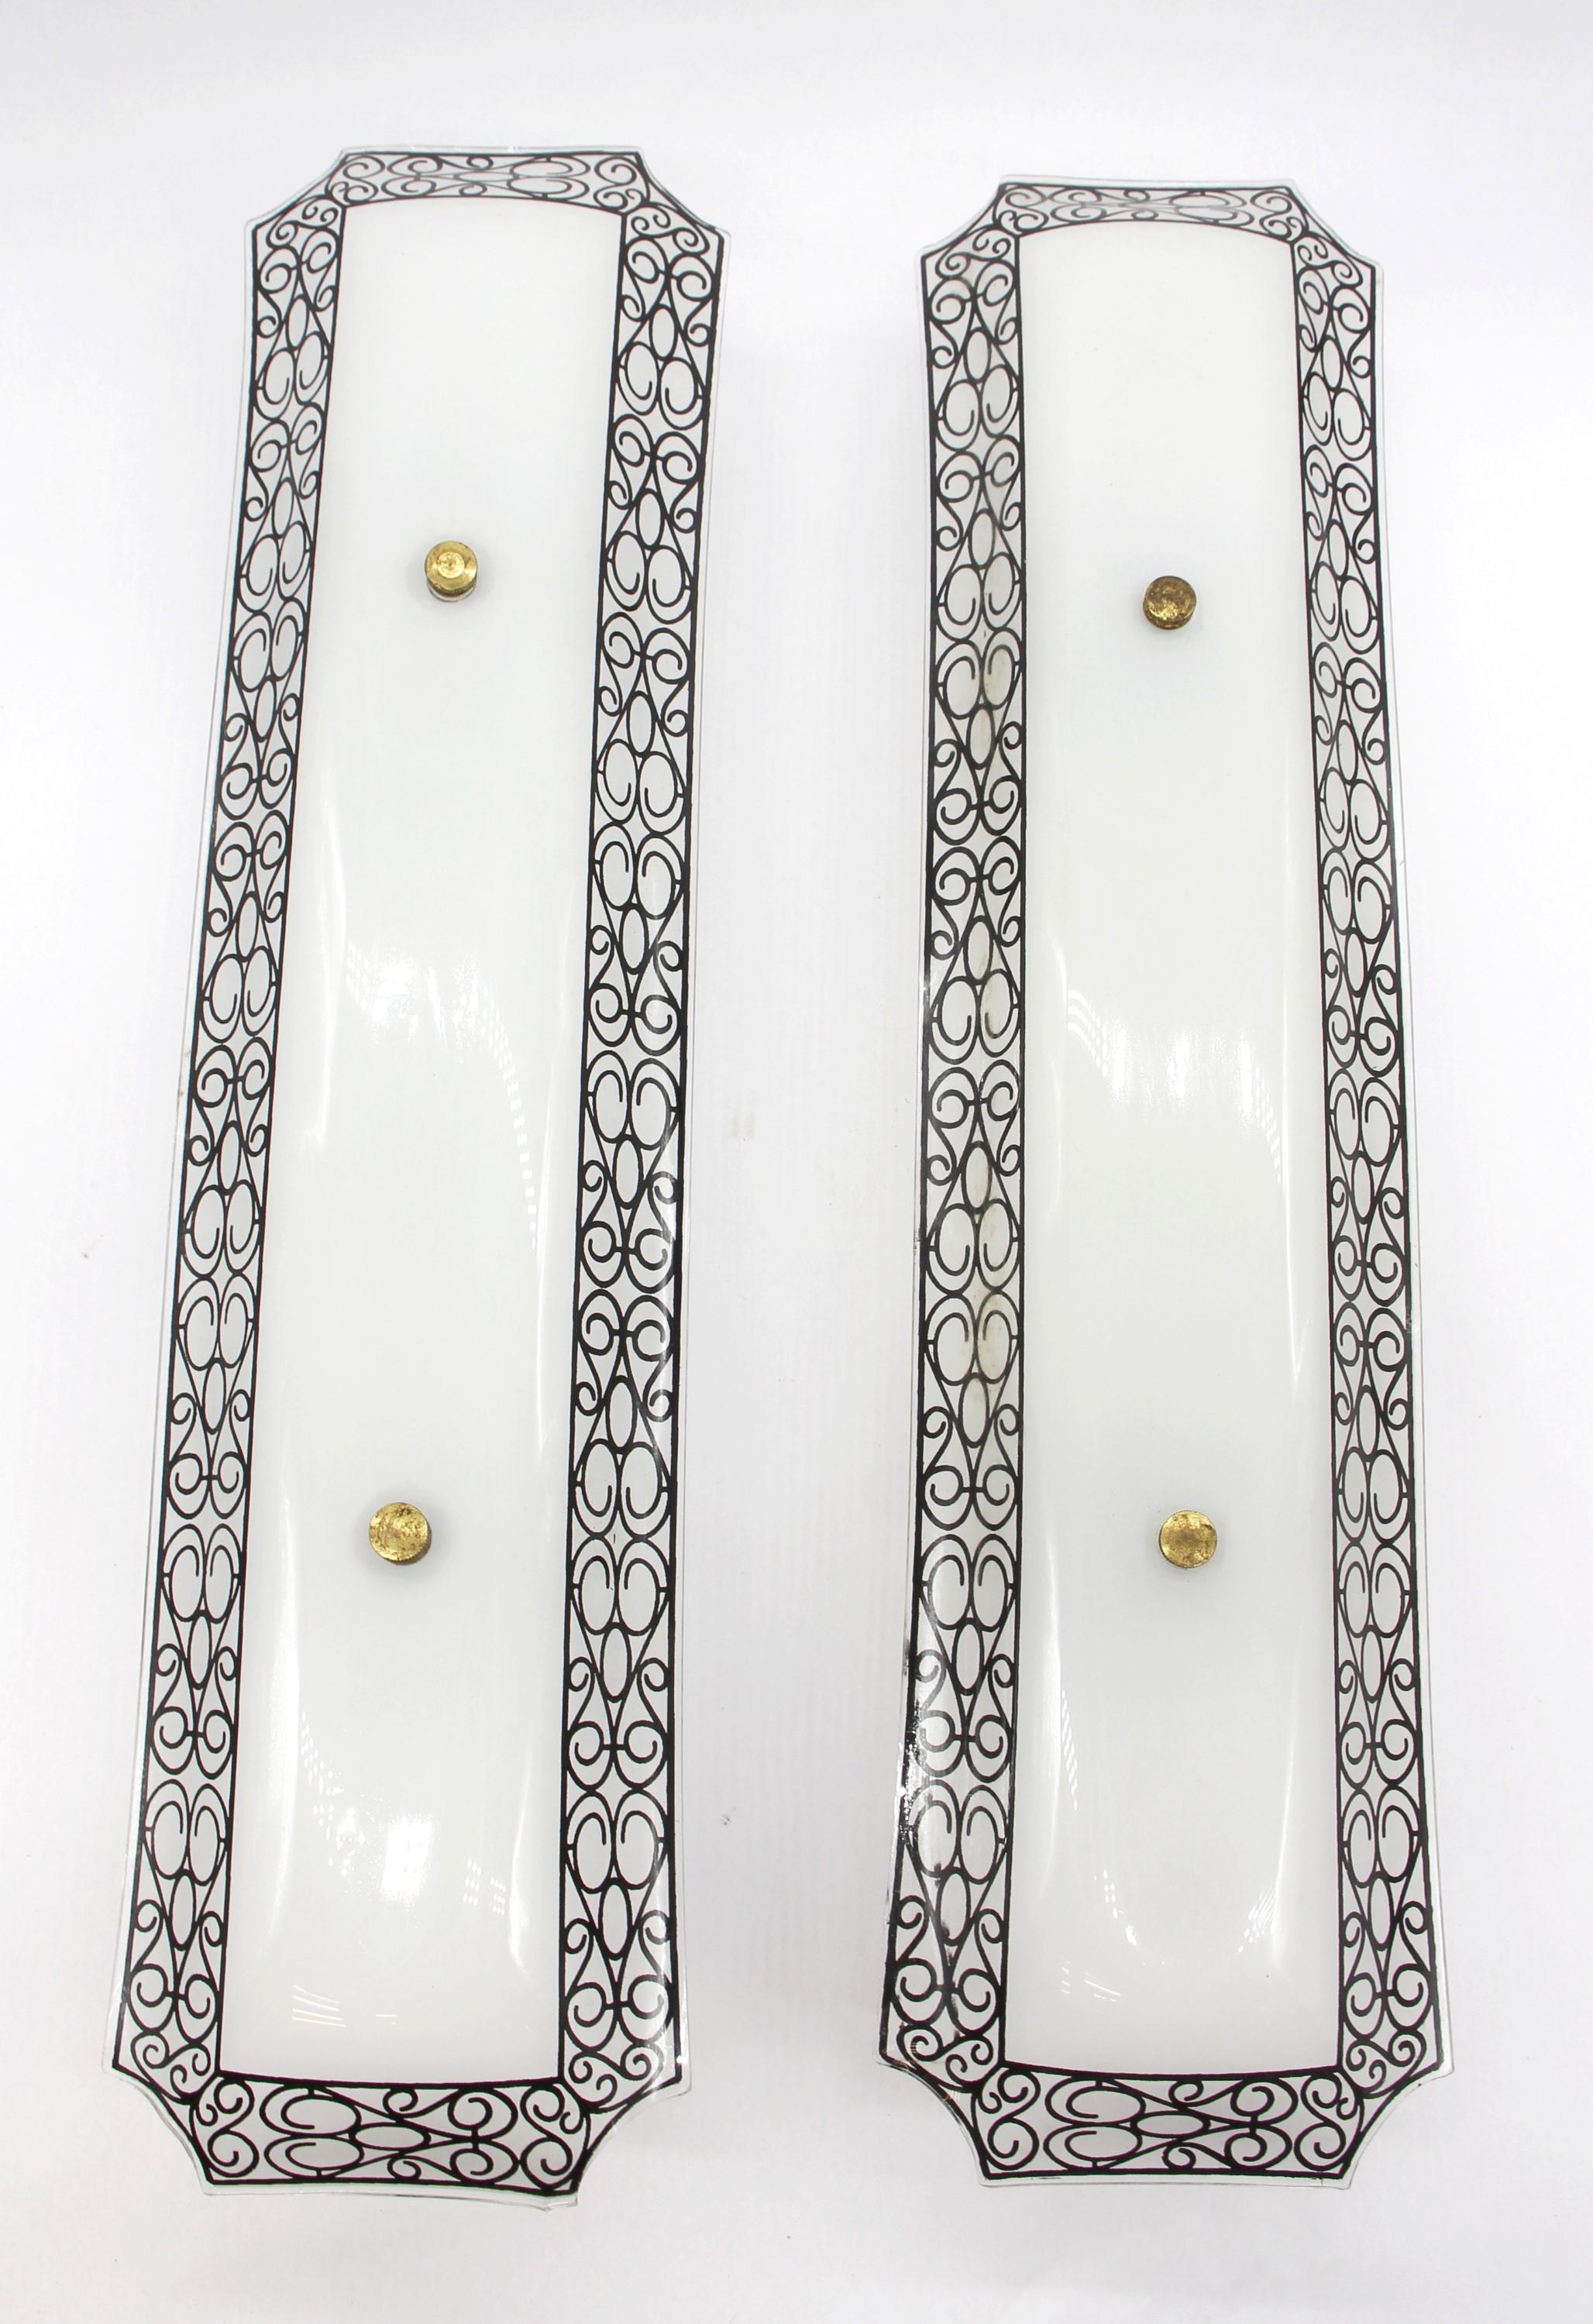 Pair of 1950s French Vanity Bathroom Sconces w/ White Glass & Black Swirl Design 5